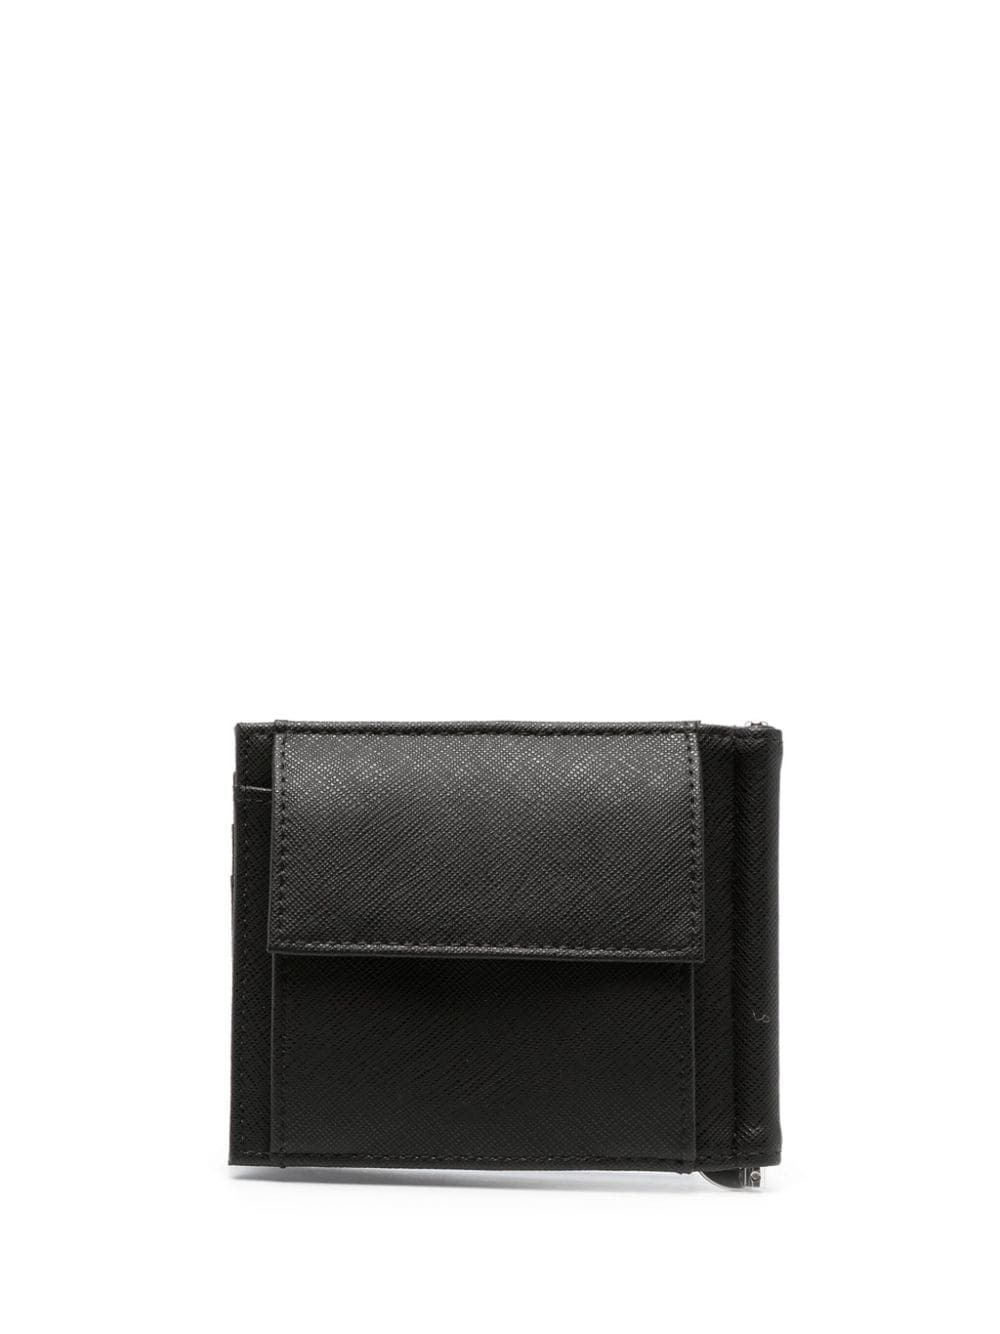 EMPORIO ARMANI - Leather Compact Wallet